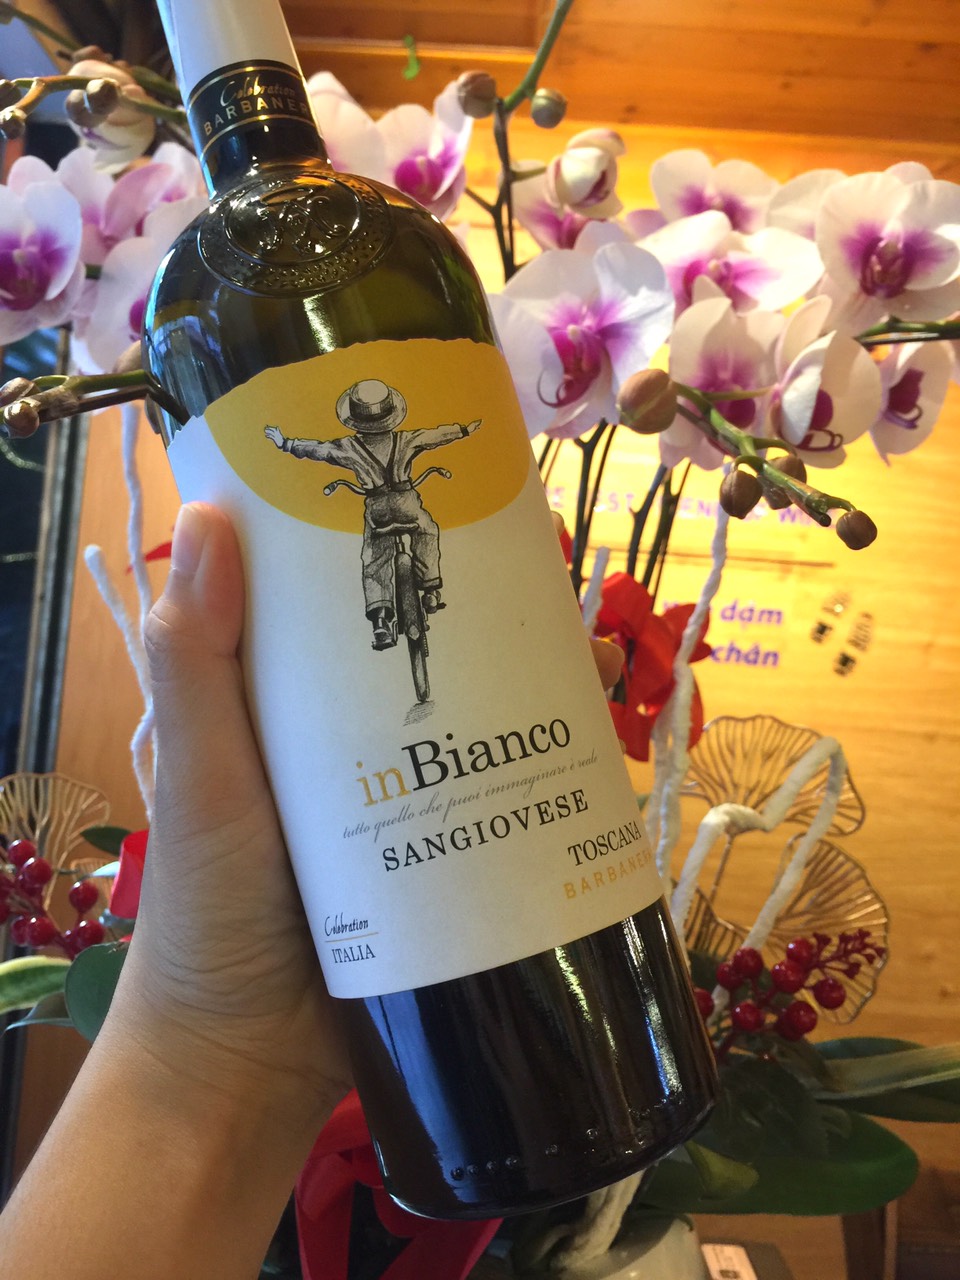 Rượu vang Barbanera Sangiovese inBianco